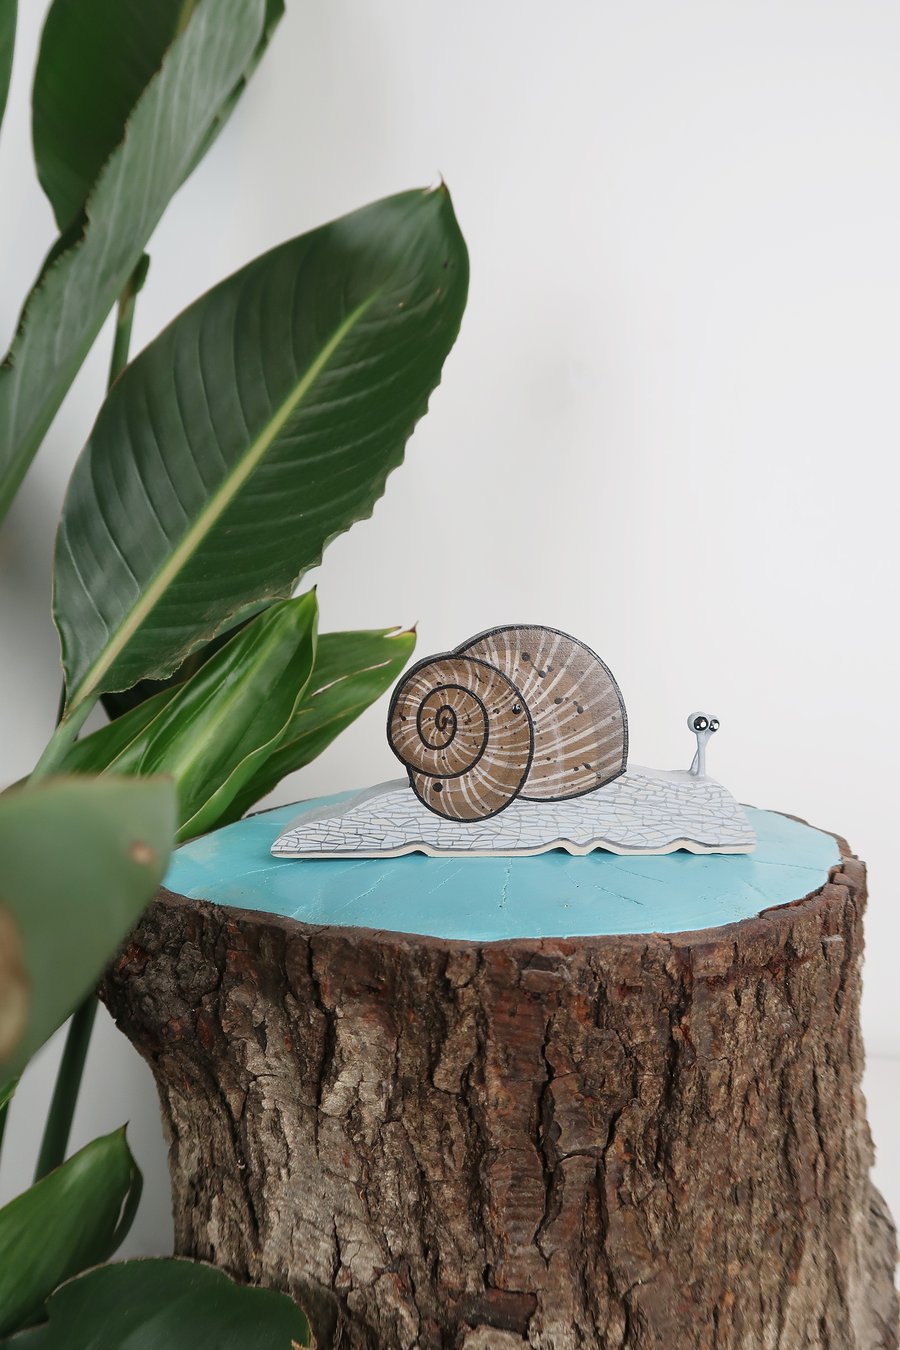 Snail ornament, wildlife art, decoration for shelf or windowsill.